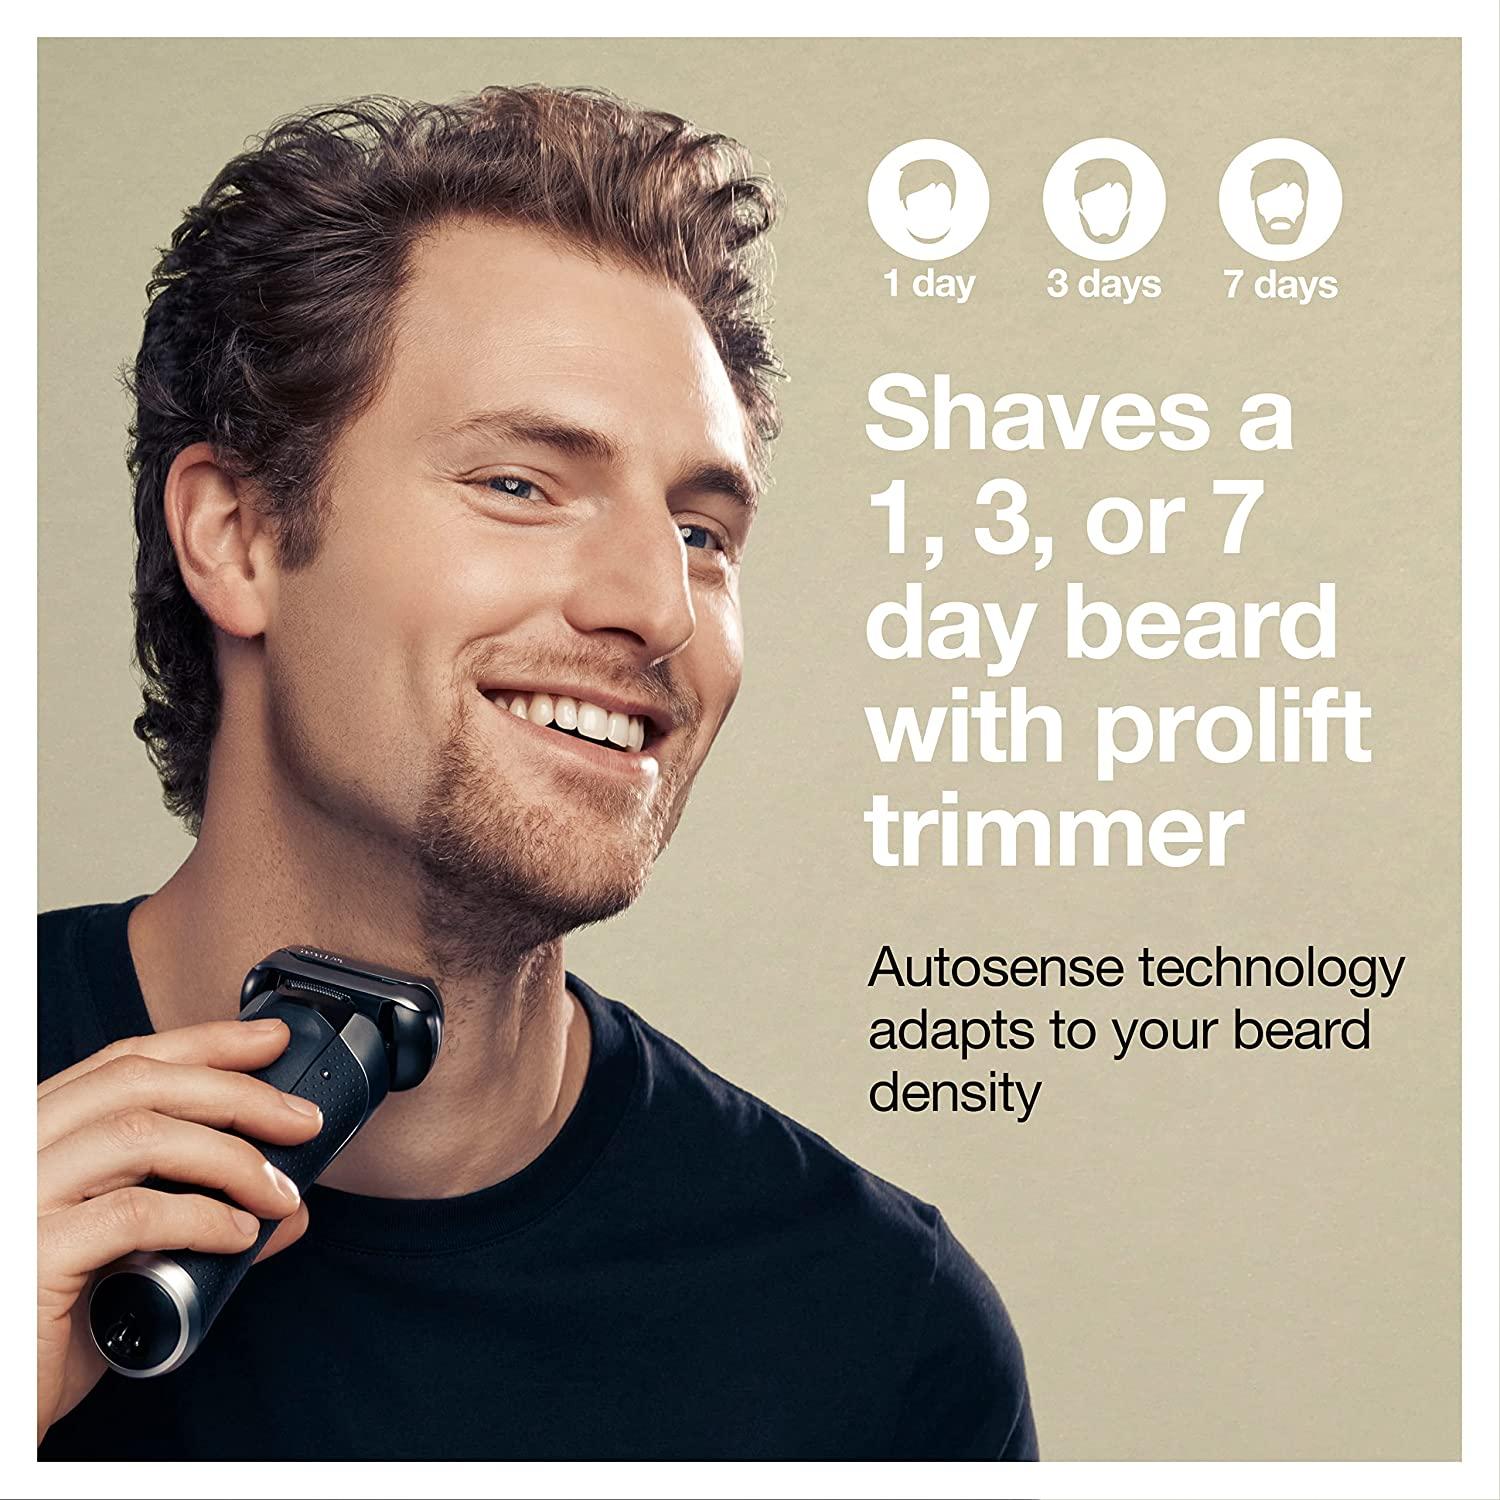 Braun Electric Razor for Men, Waterproof Foil Shaver, Series 9 Pro 9477cc  @Productsjunction 